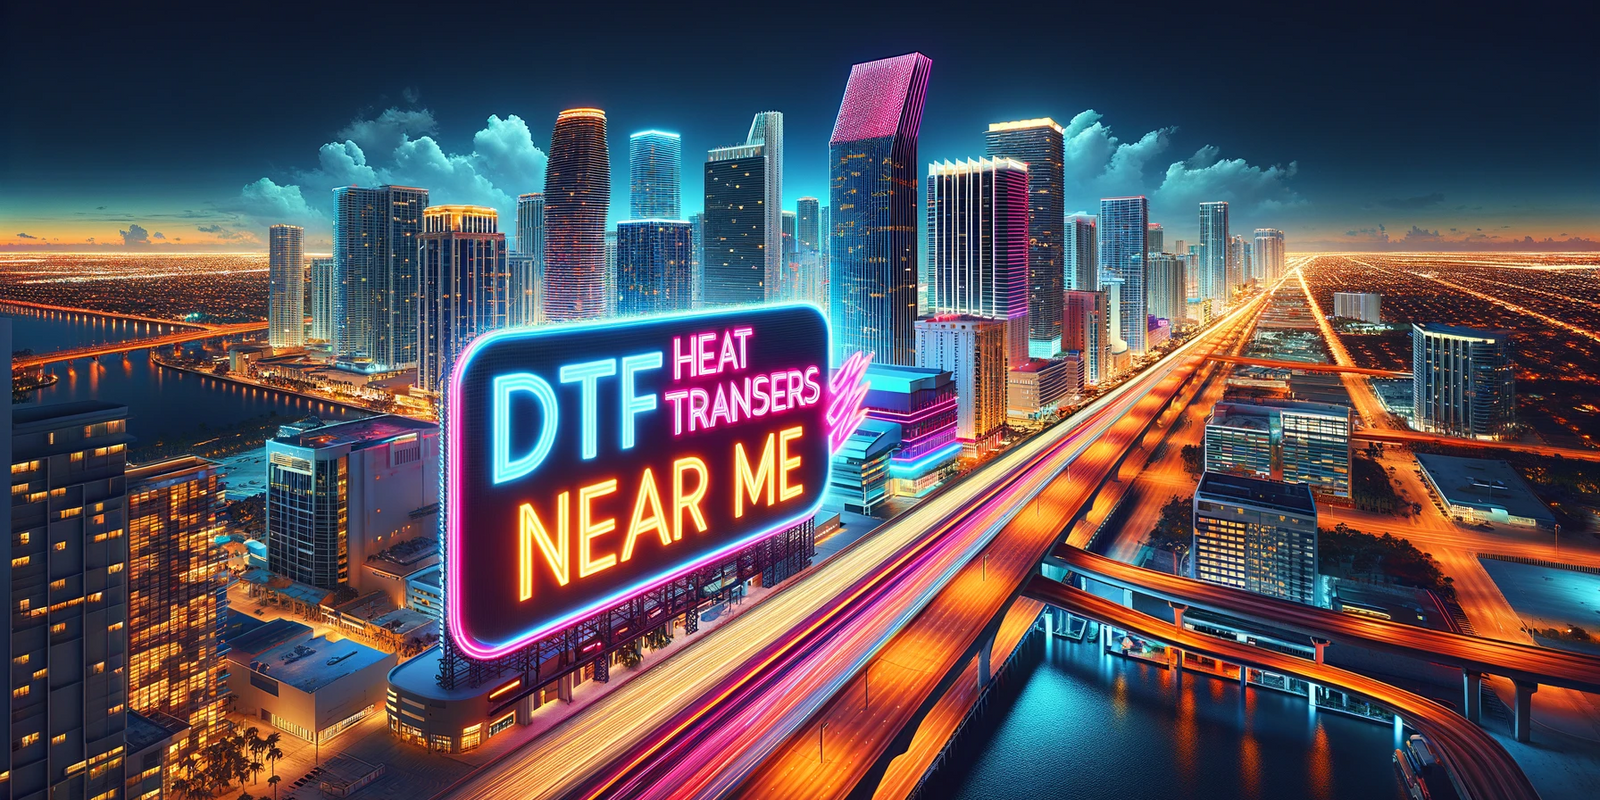 'DTF Heat Transfers Near Me' over the city, illustrating the dynamic digital printing scene in Miami."